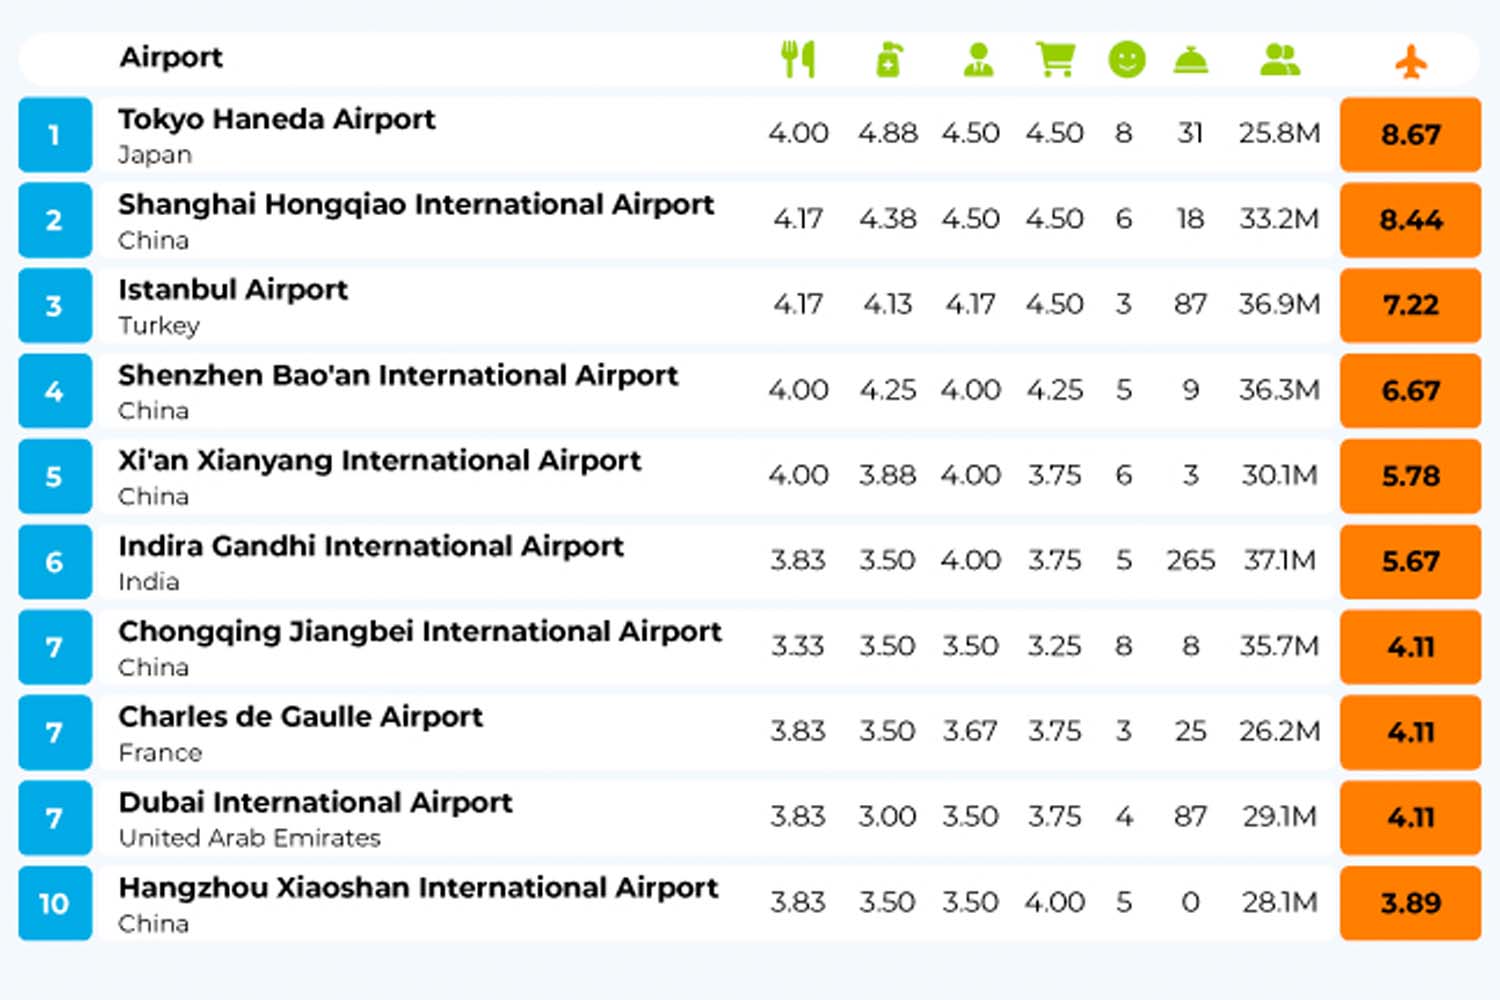 Global Airport Rankings